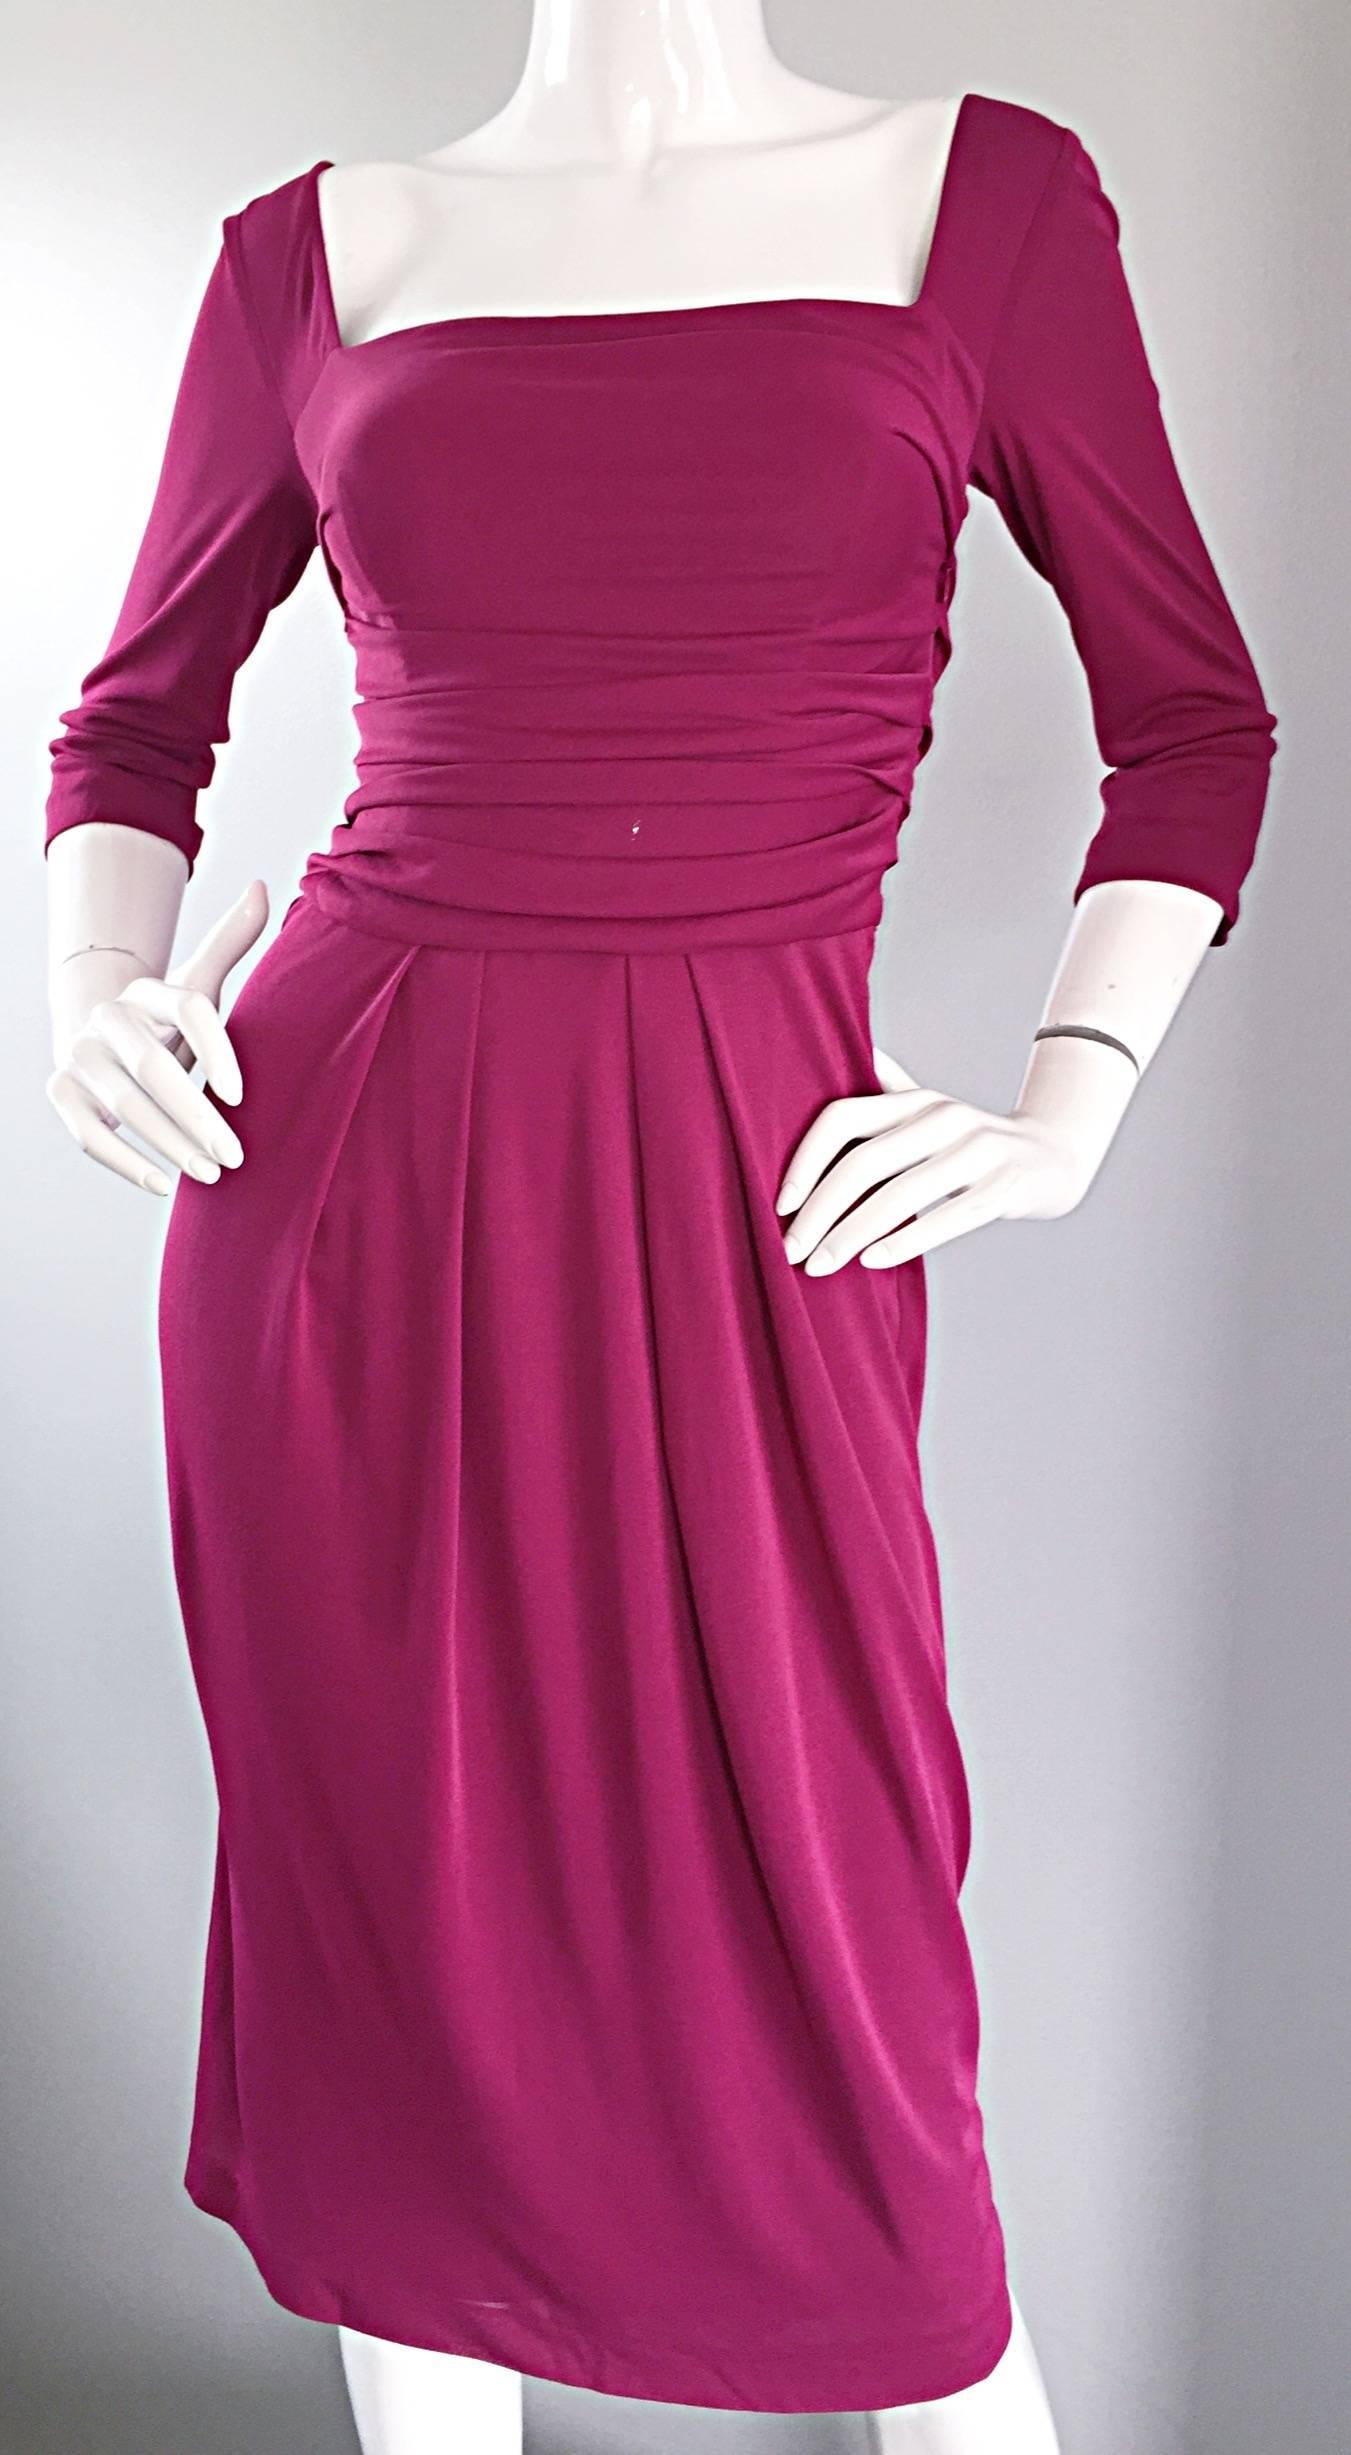 NWT 1990s Alberta Ferretti Raspberry Pink 3/4 Sleeves Vintage Jersey Dress 1